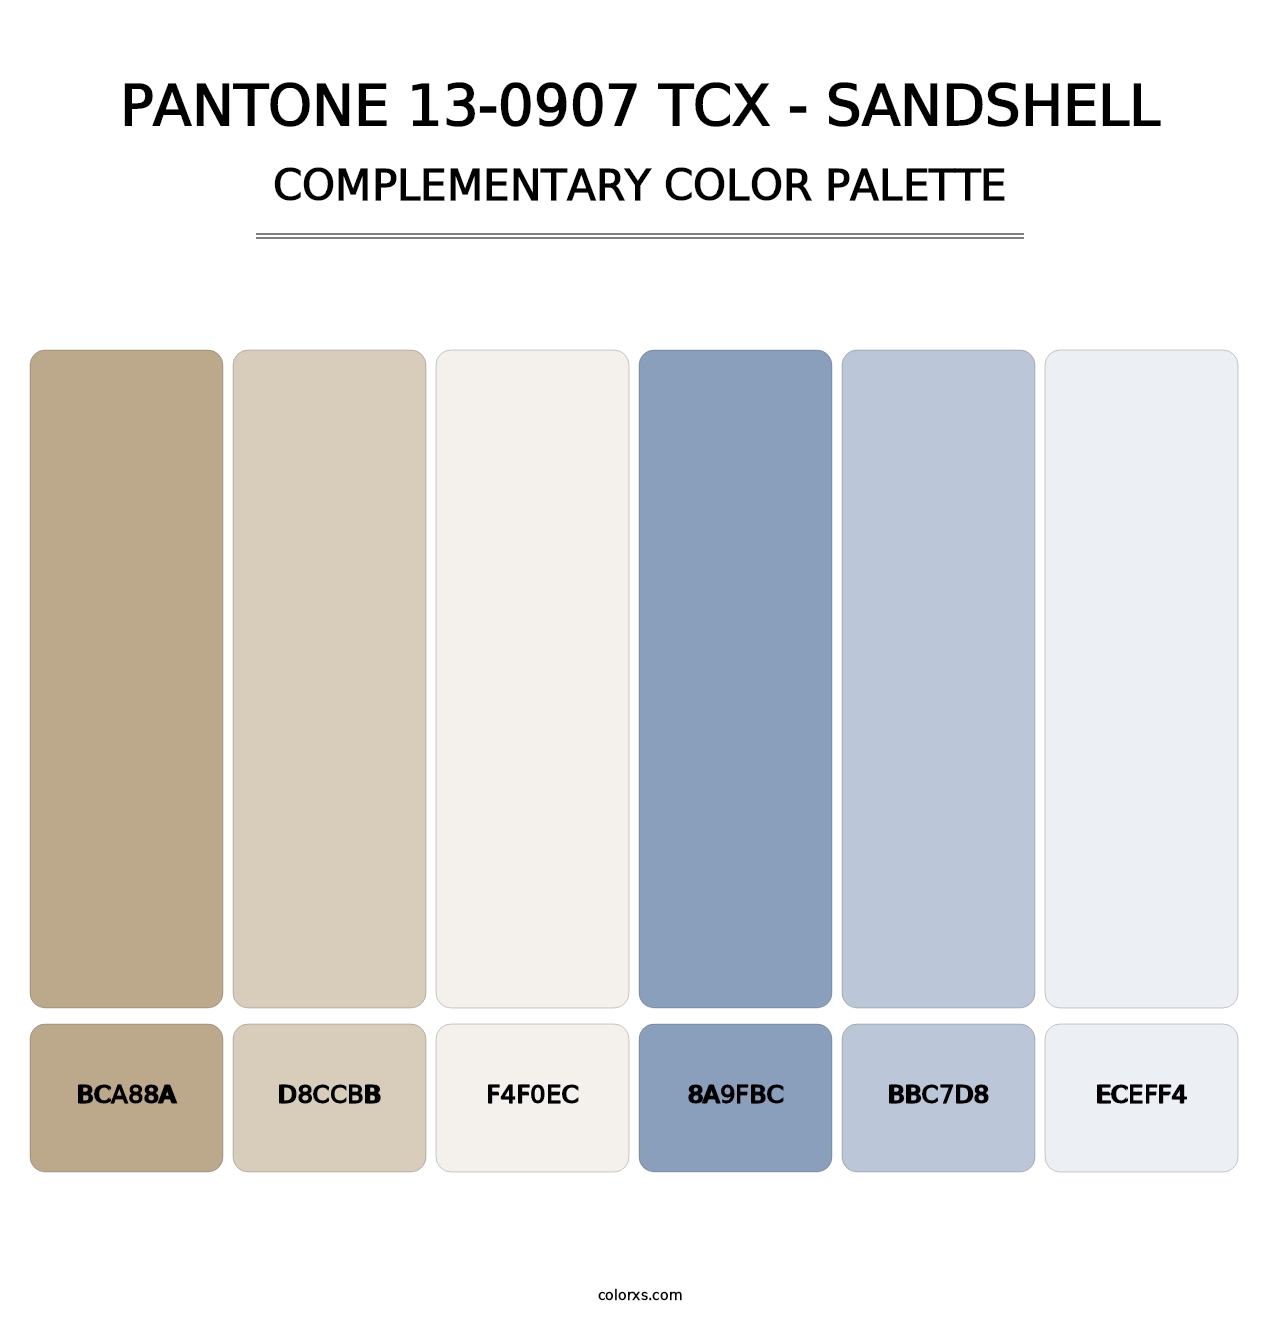 PANTONE 13-0907 TCX - Sandshell - Complementary Color Palette